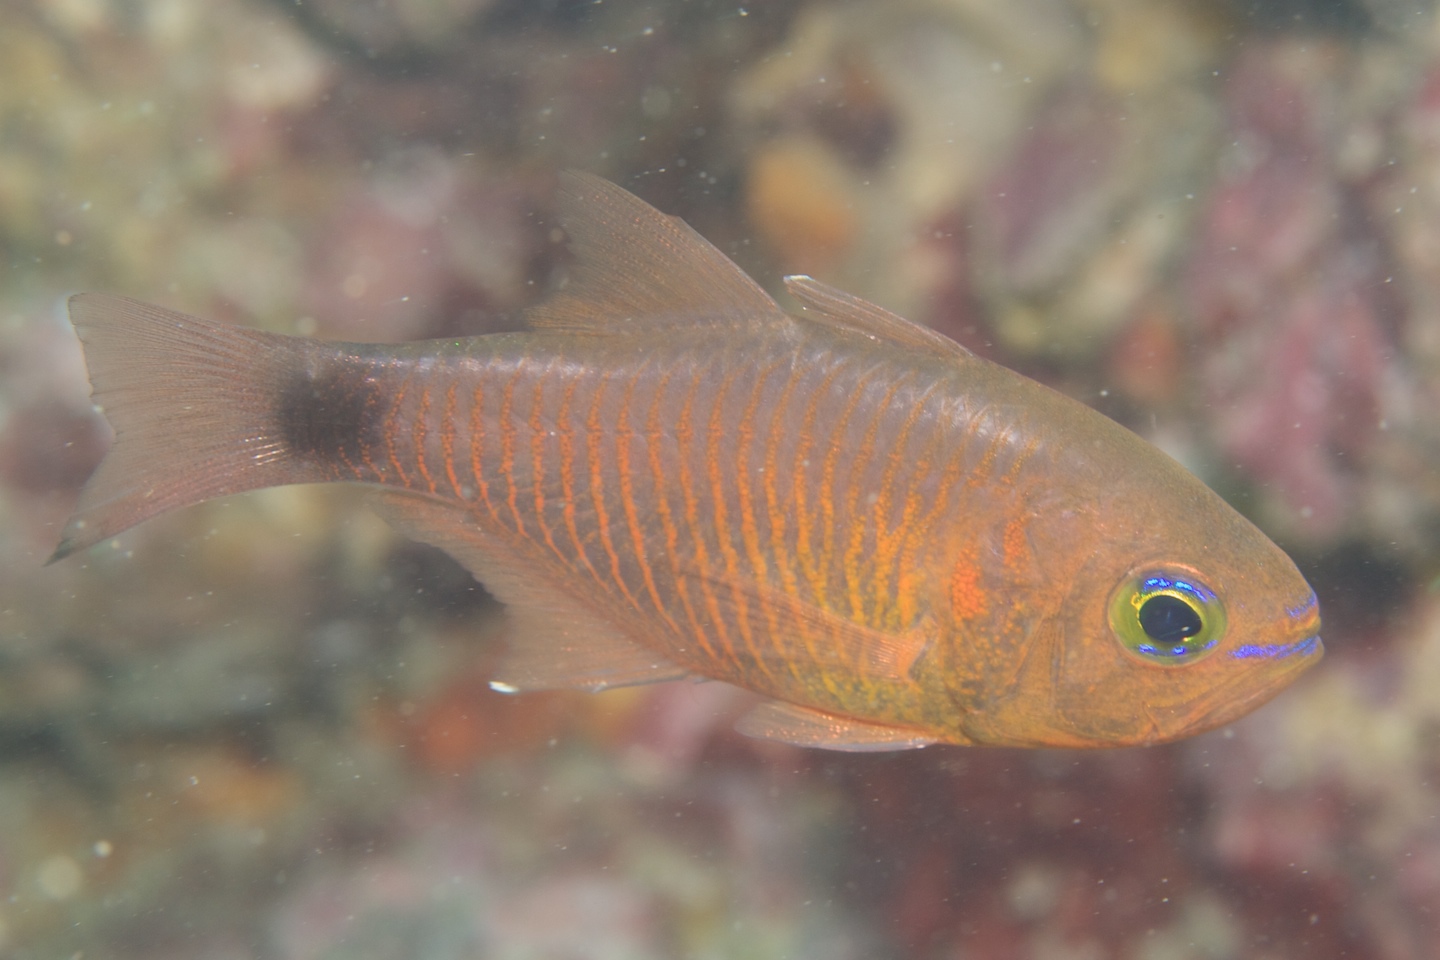 Orangelined cardinalfish